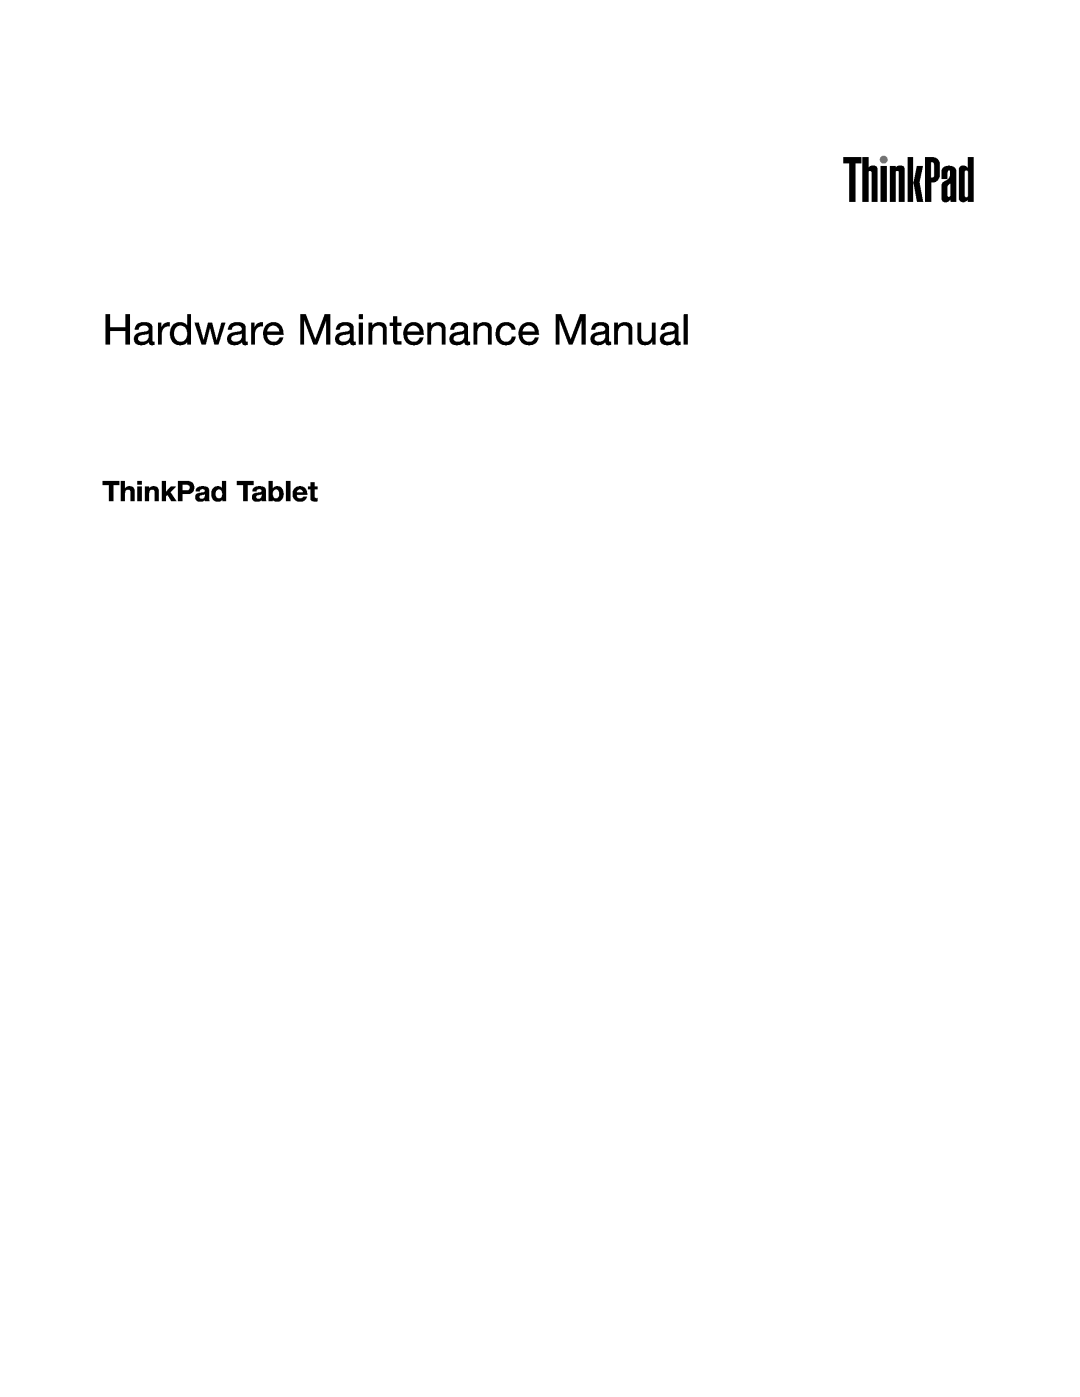 Lenovo 183822U, 183825U manual ThinkPad Tablet, Hardware Maintenance Manual 